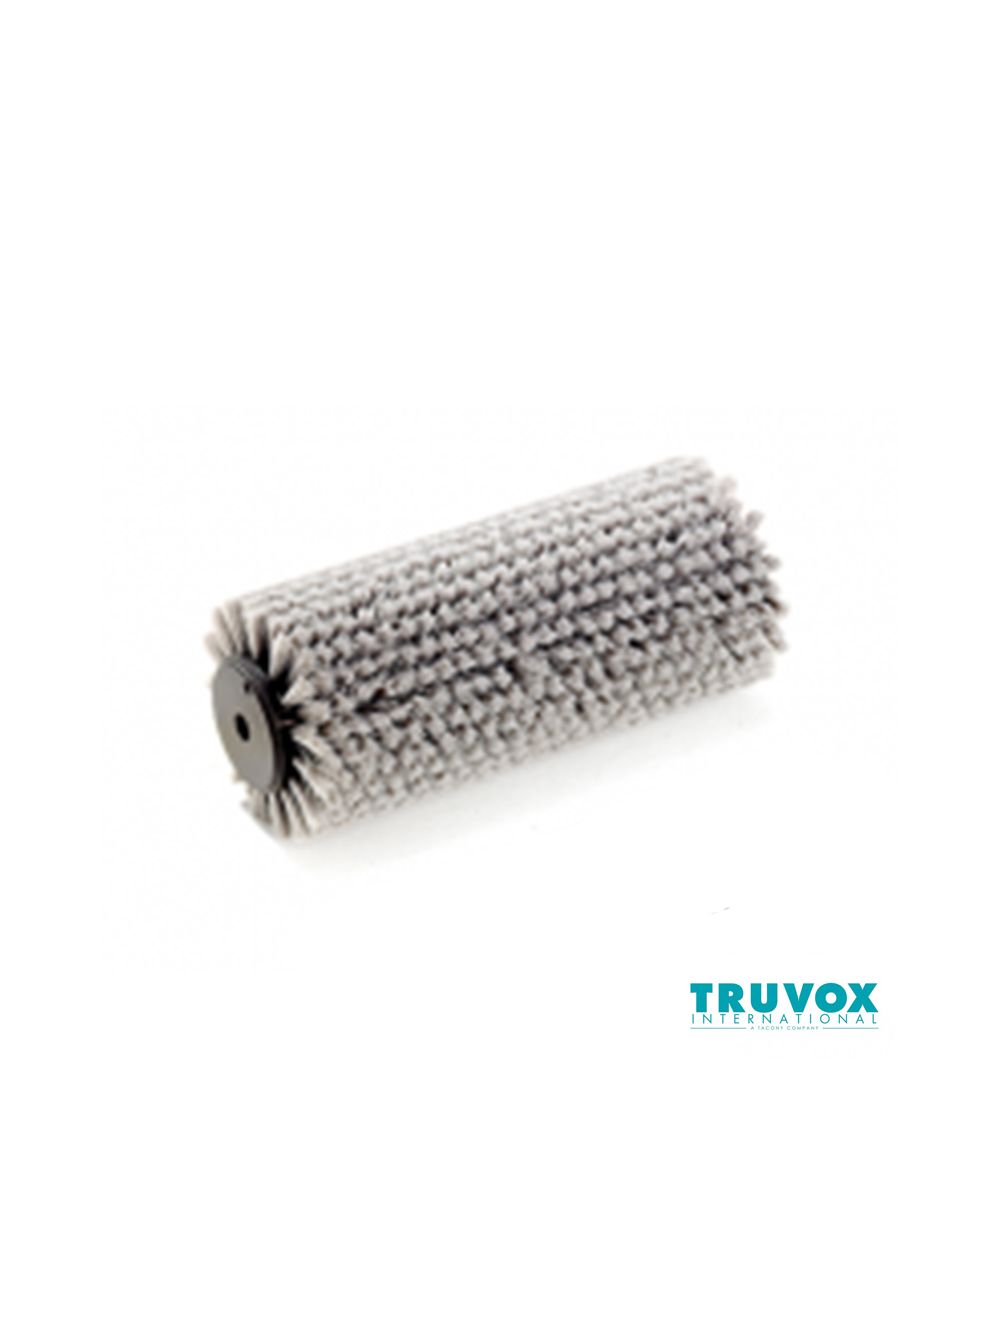 Truvox - MW340 Soft brush - grey* (90-0131-0000)